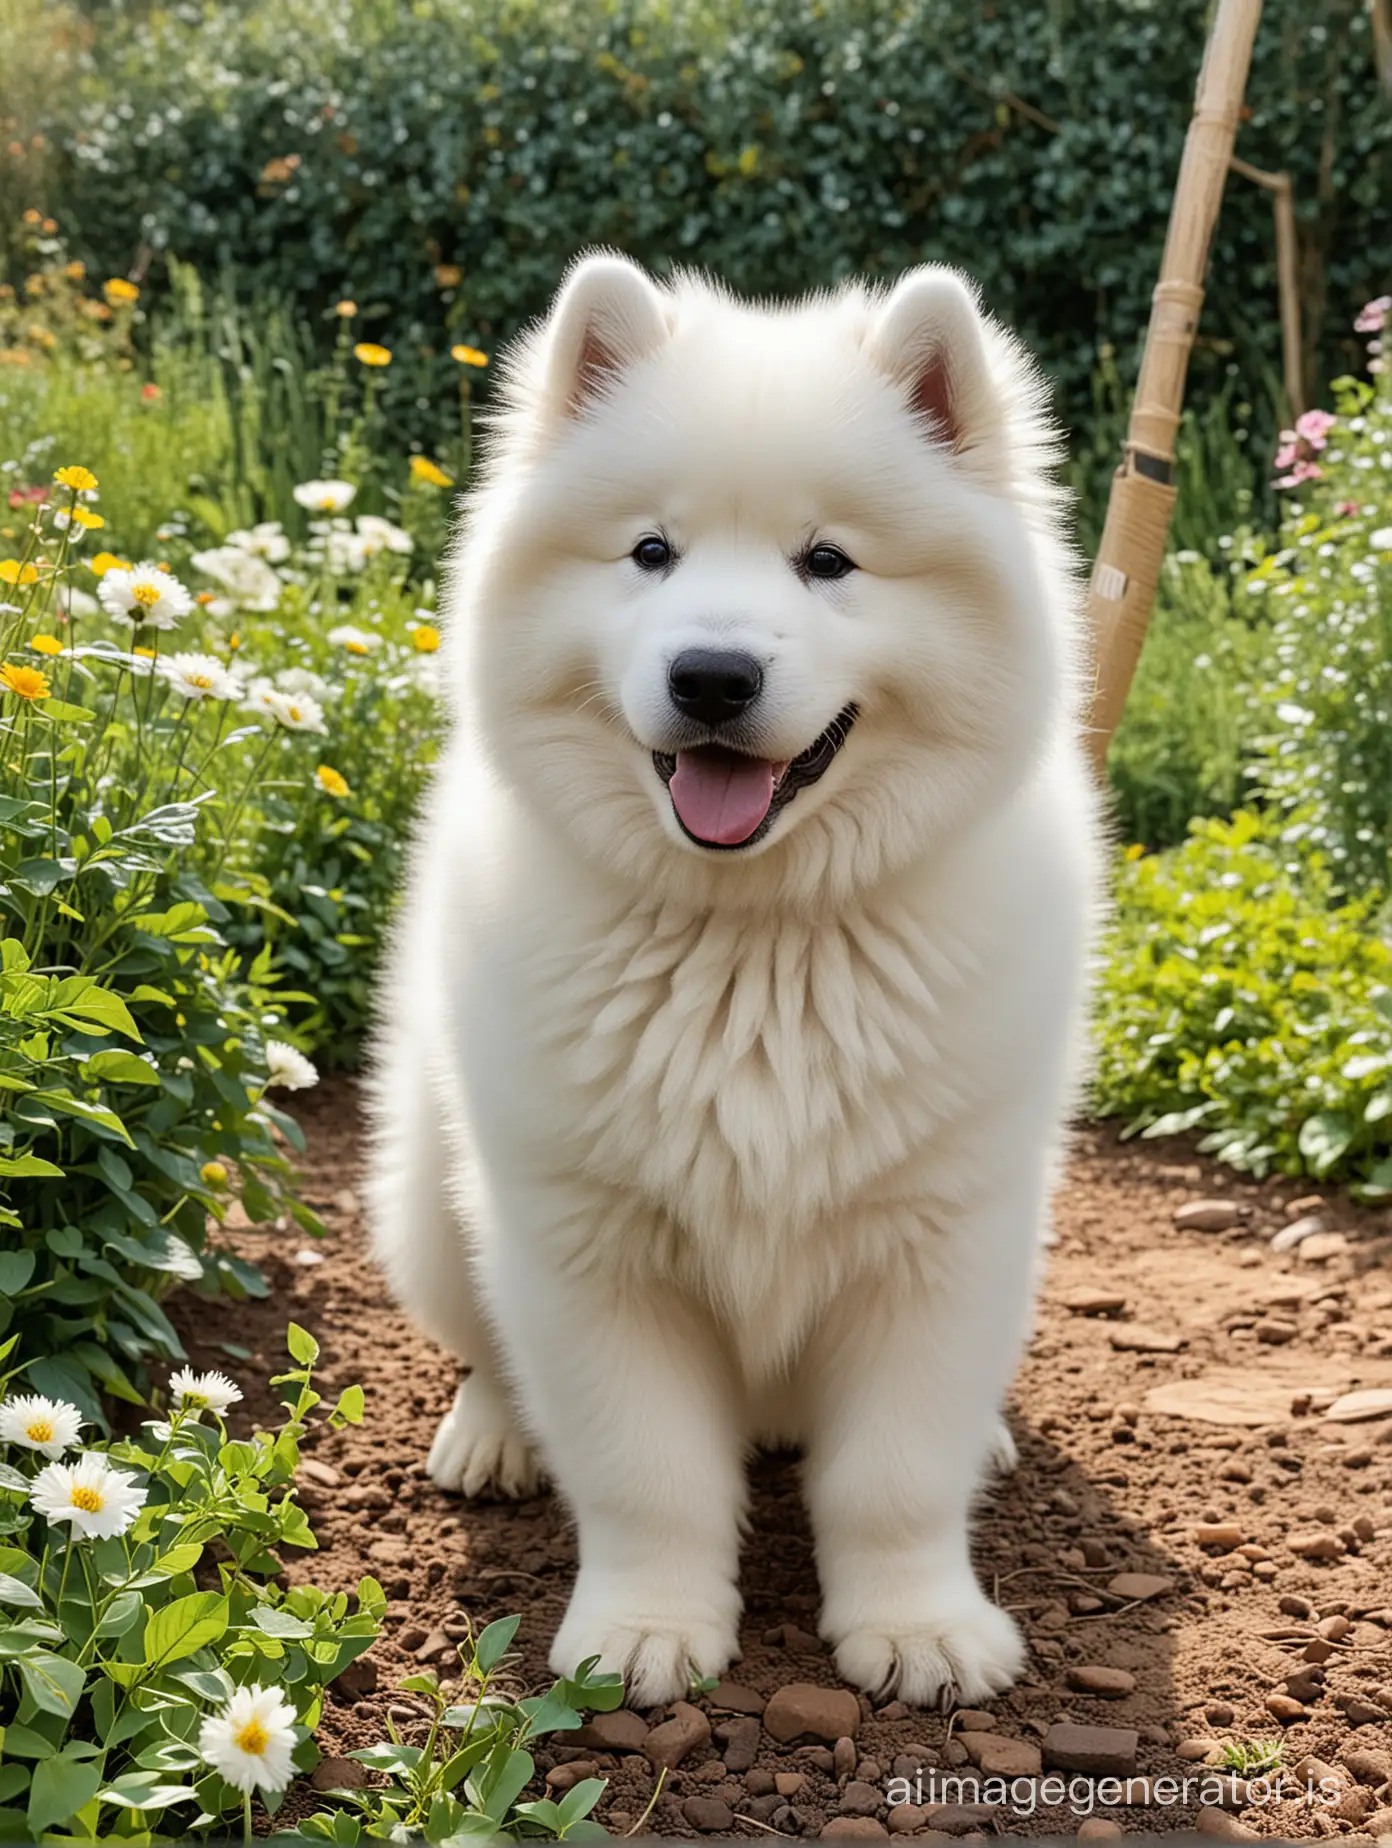 Cheerful-Samoyed-Puppy-Enjoying-Playtime-in-the-Vibrant-Garden